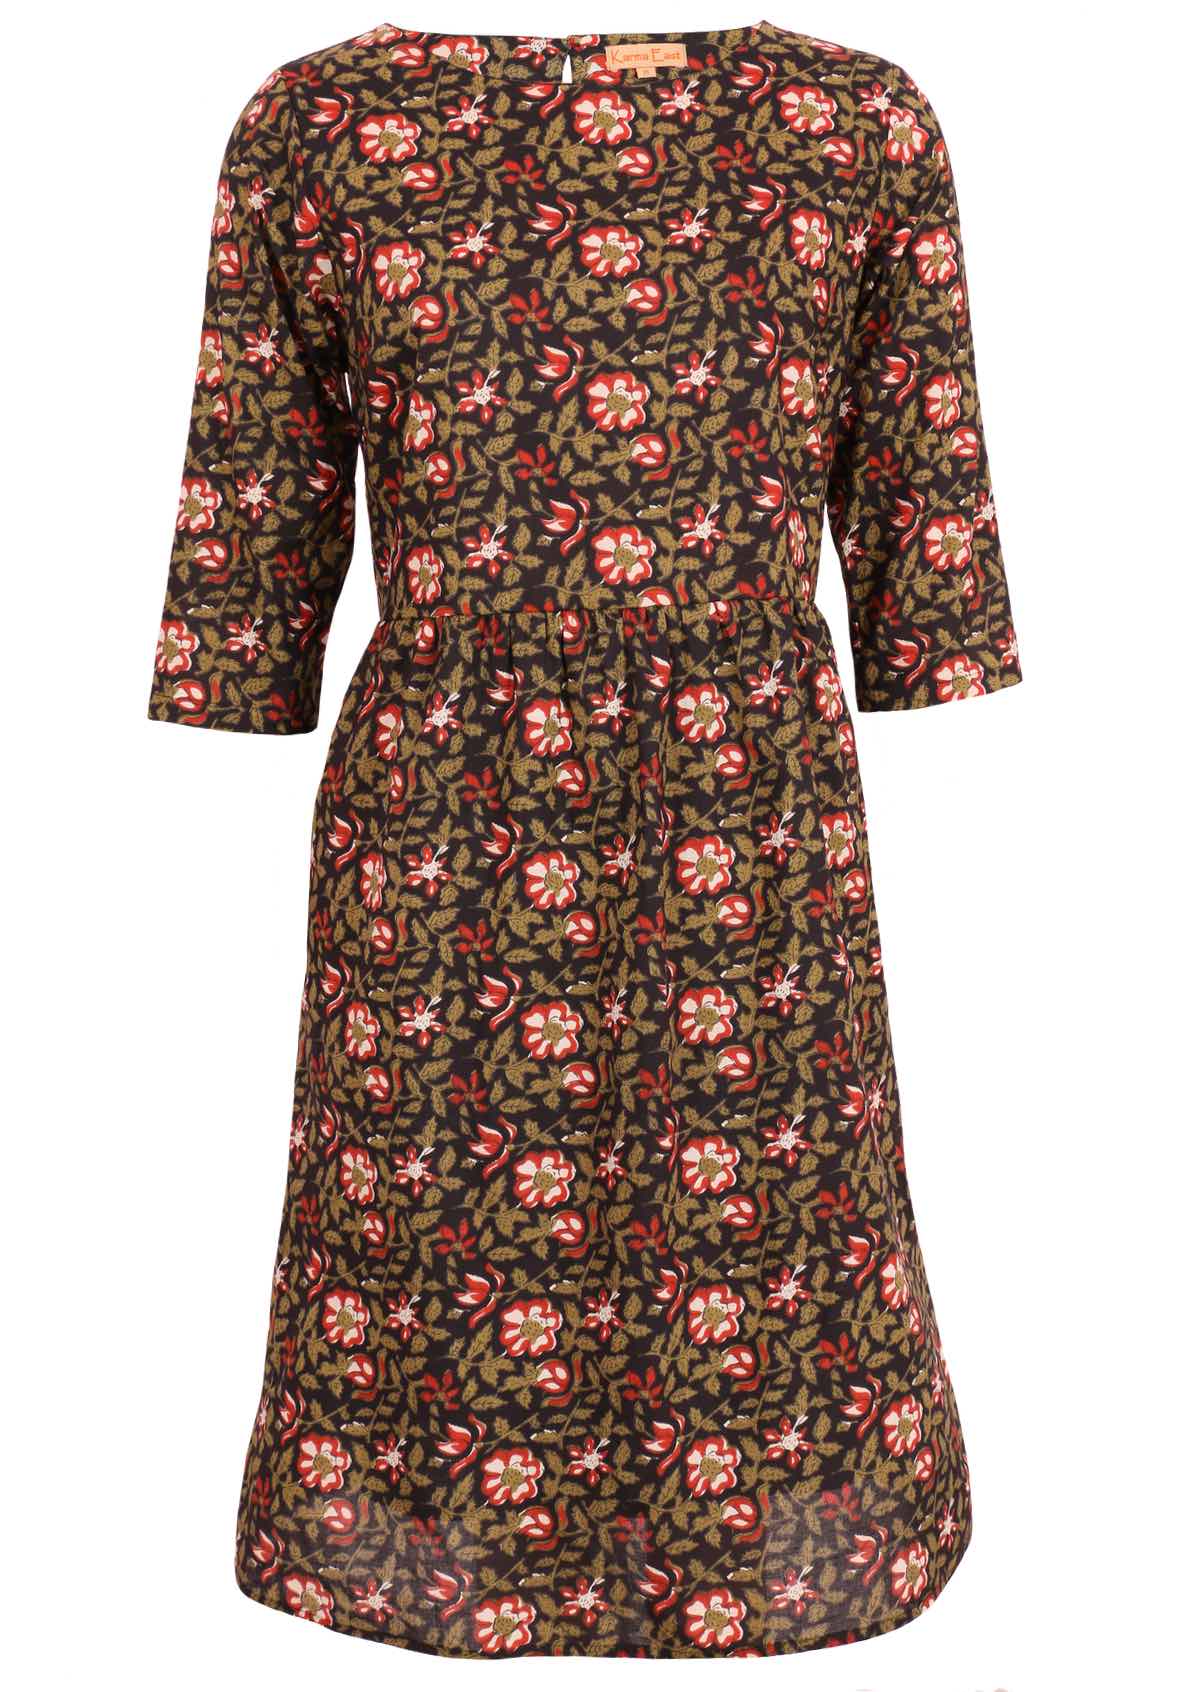 100% cotton floral dress designed in Australia